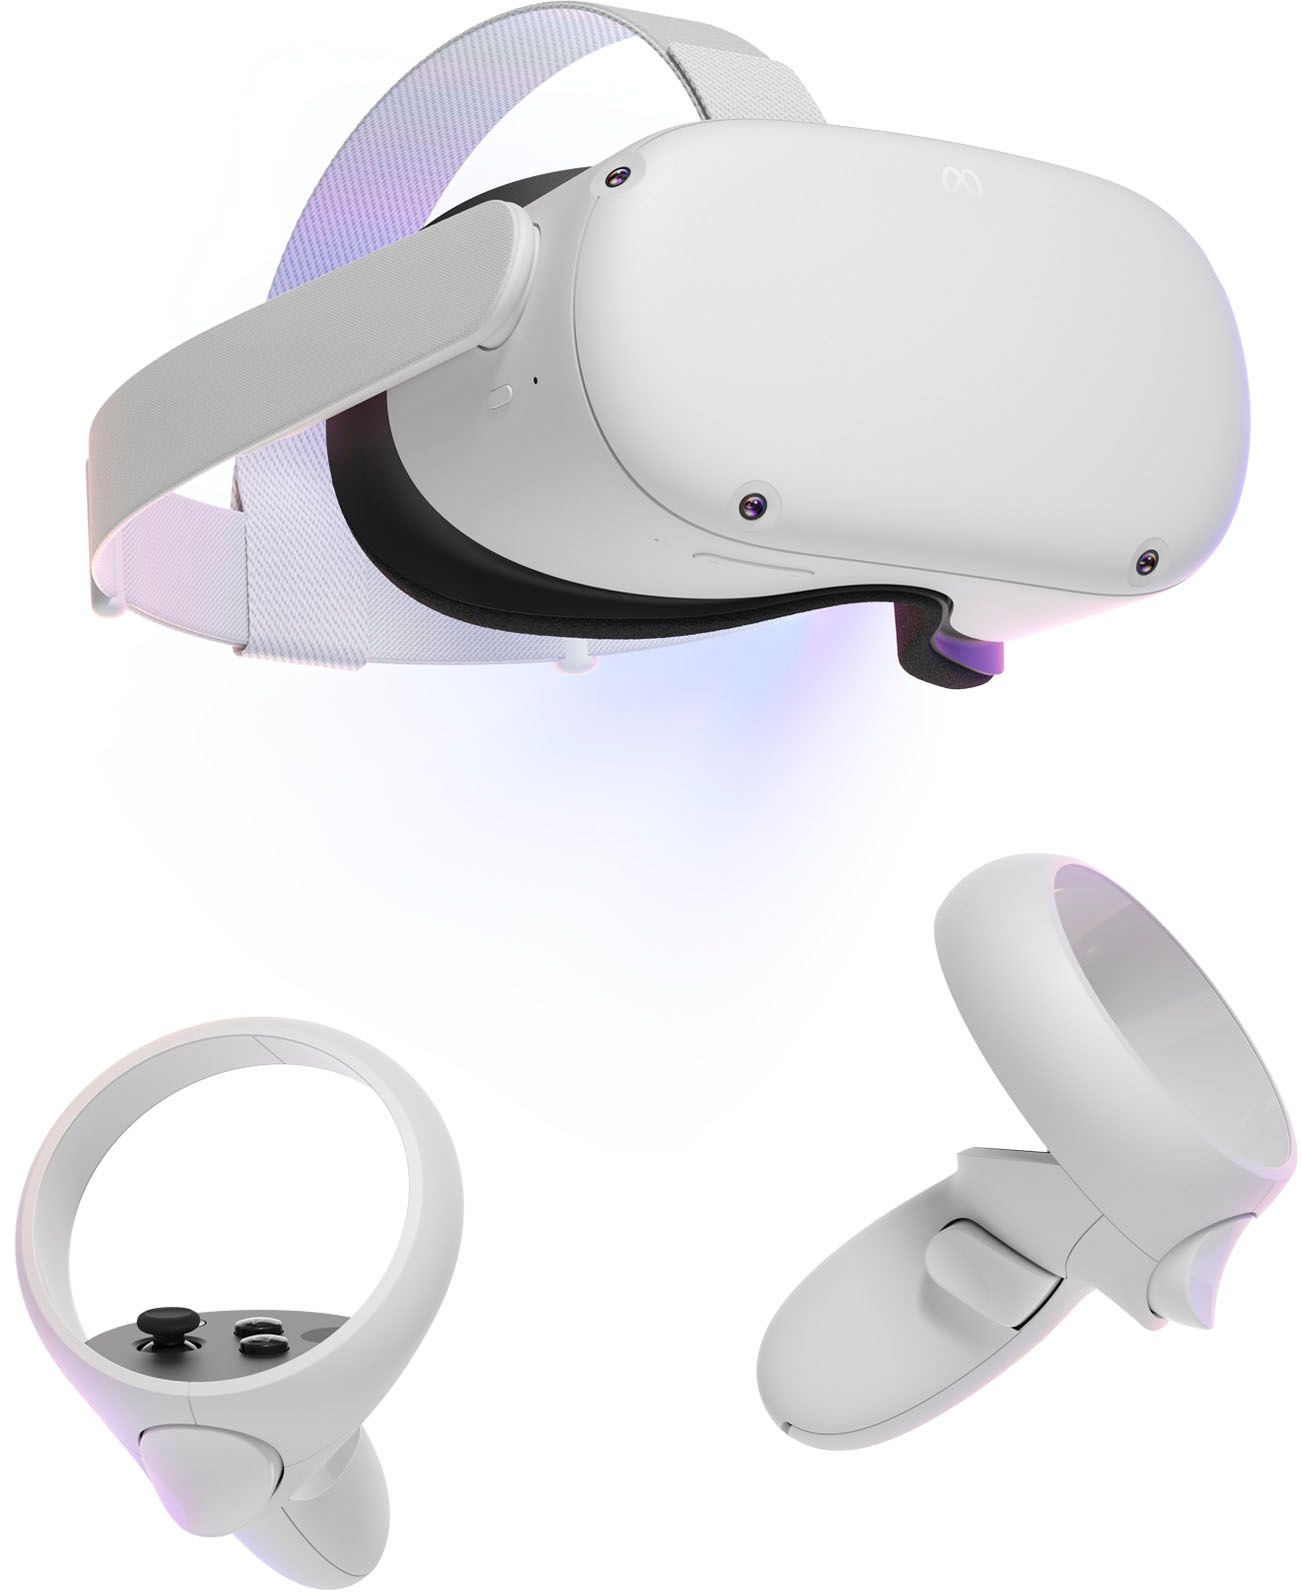 Meta Quest 2 Advanced All-In-One Virtual Reality Headset 128GB Gray 899-00182-02 - Best Buy | Best Buy U.S.